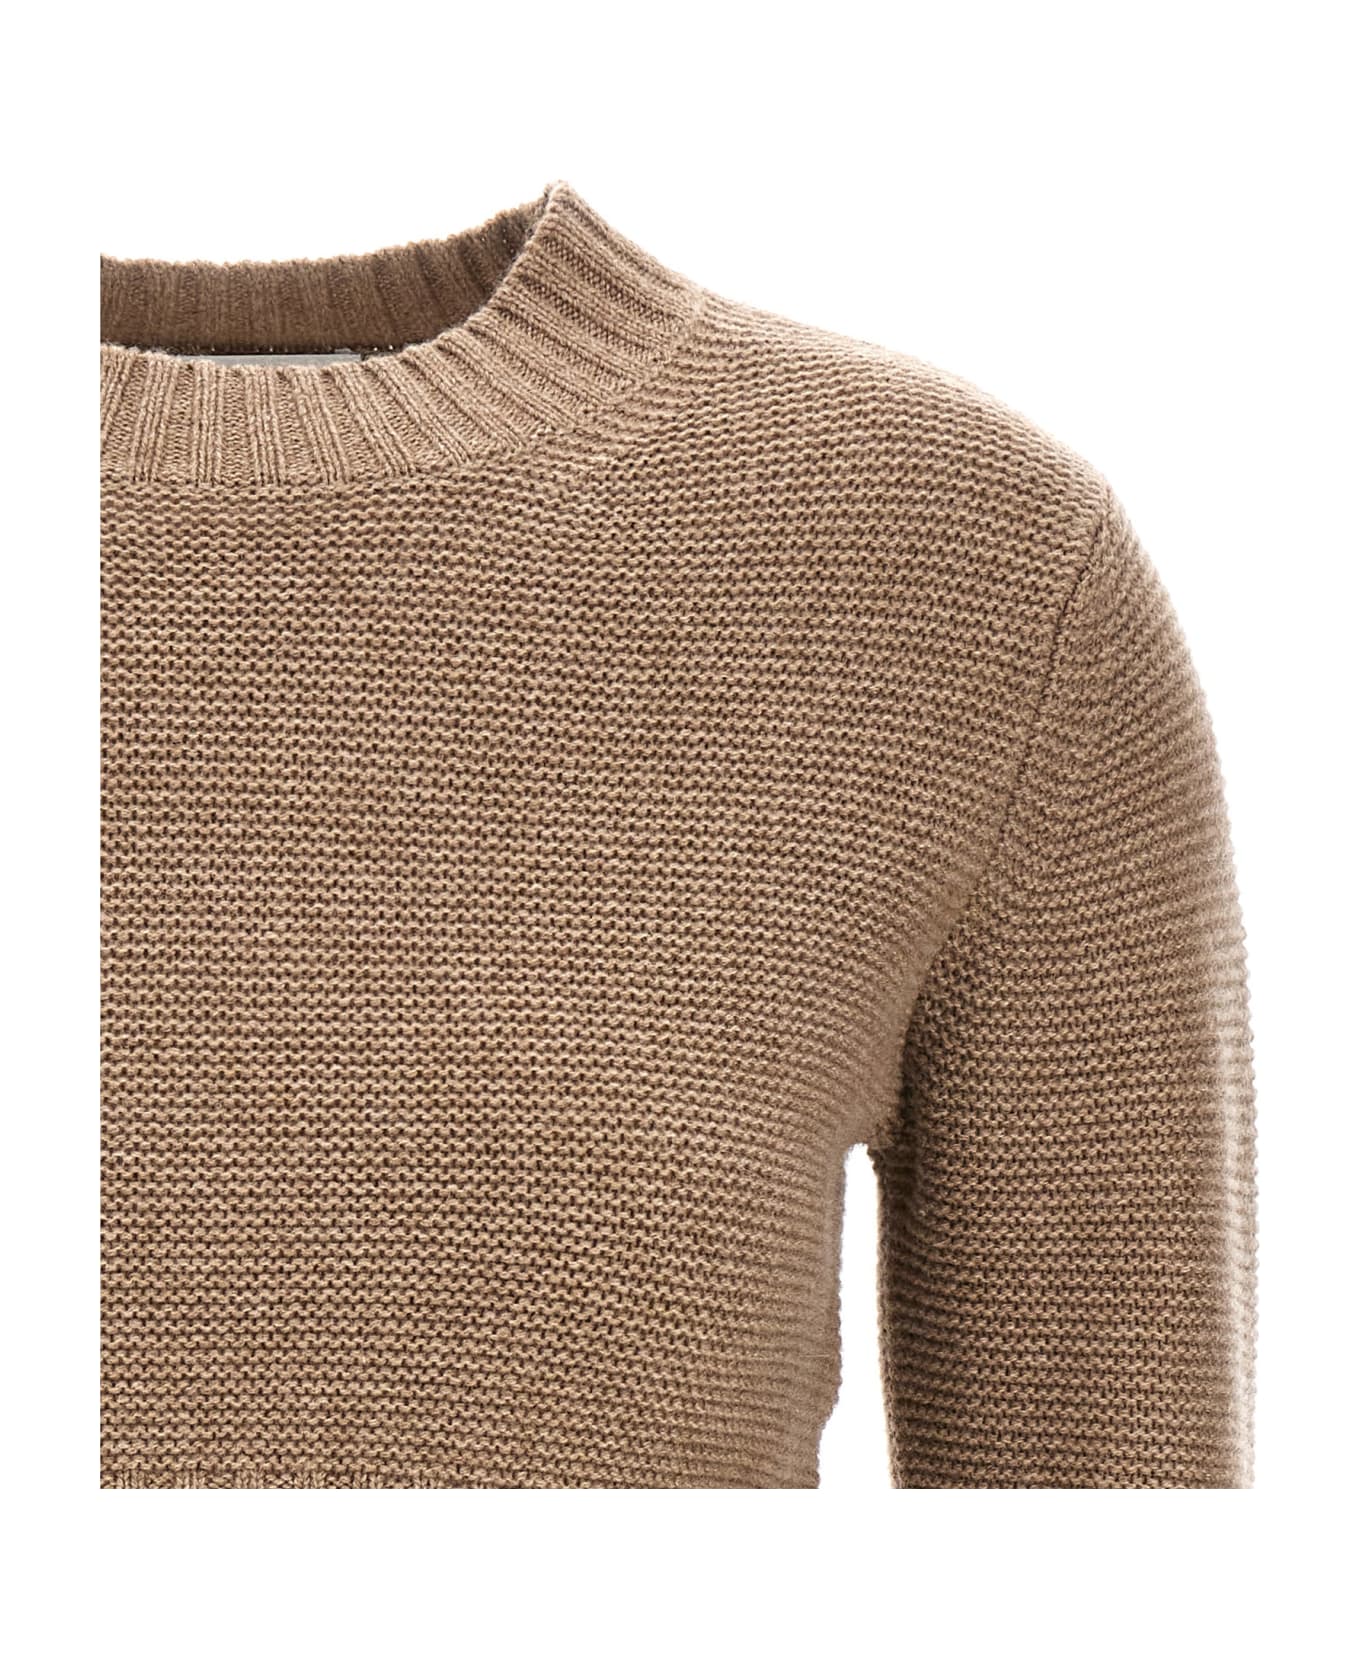 Max Mara 'kaya' Sweater - Beige